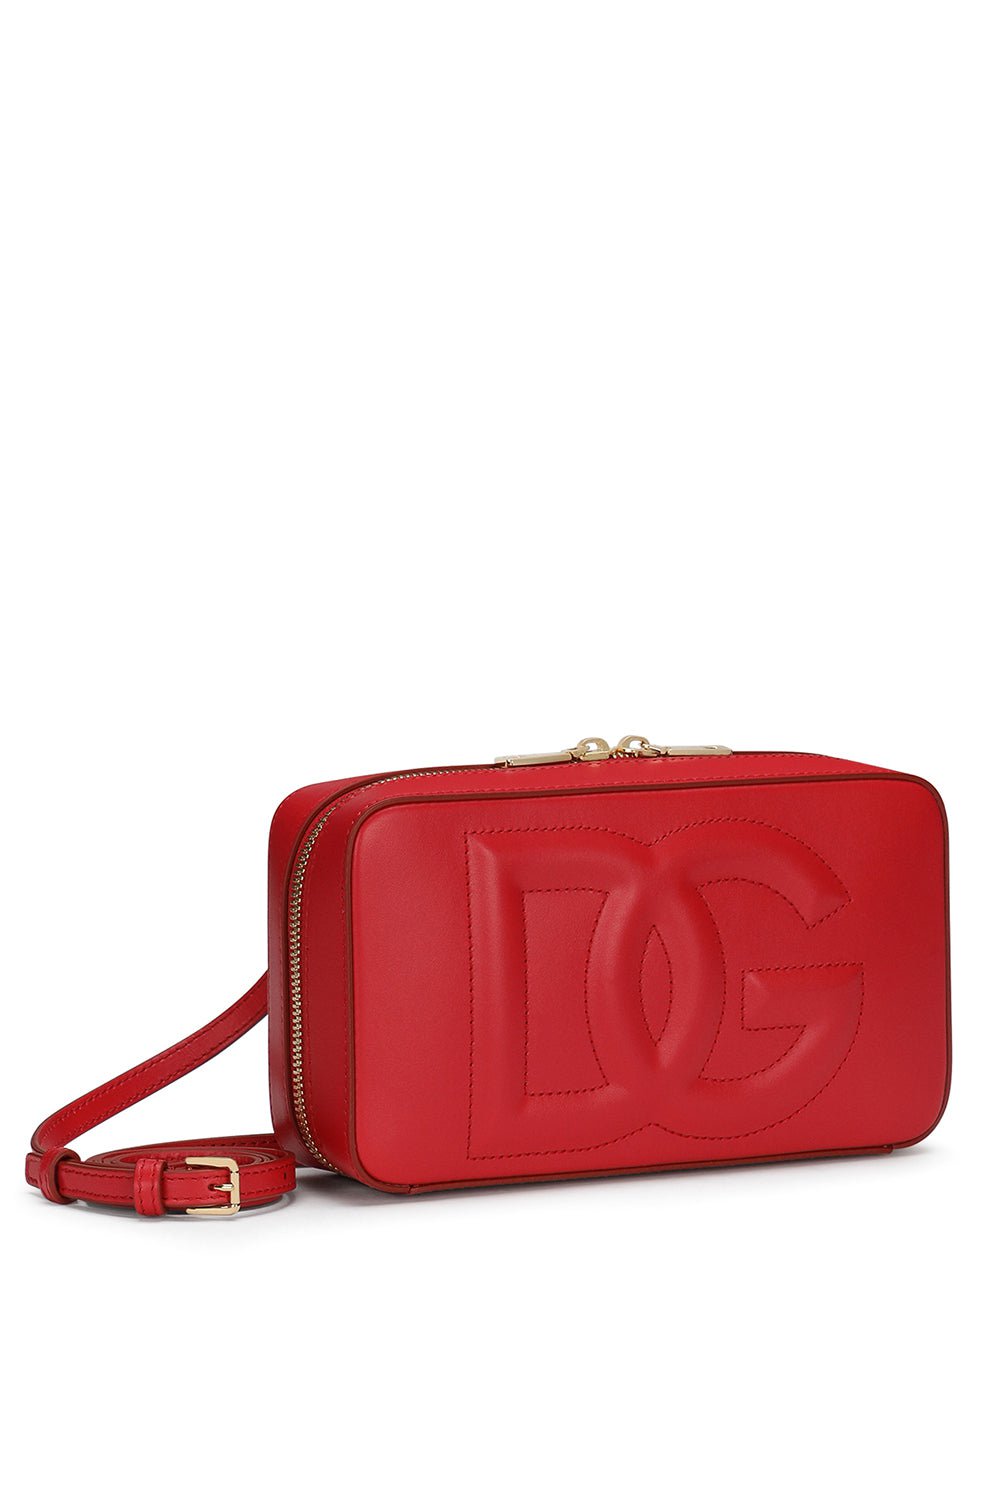 DOLCE & GABBANA-Small DG Logo Camera Bag-RED